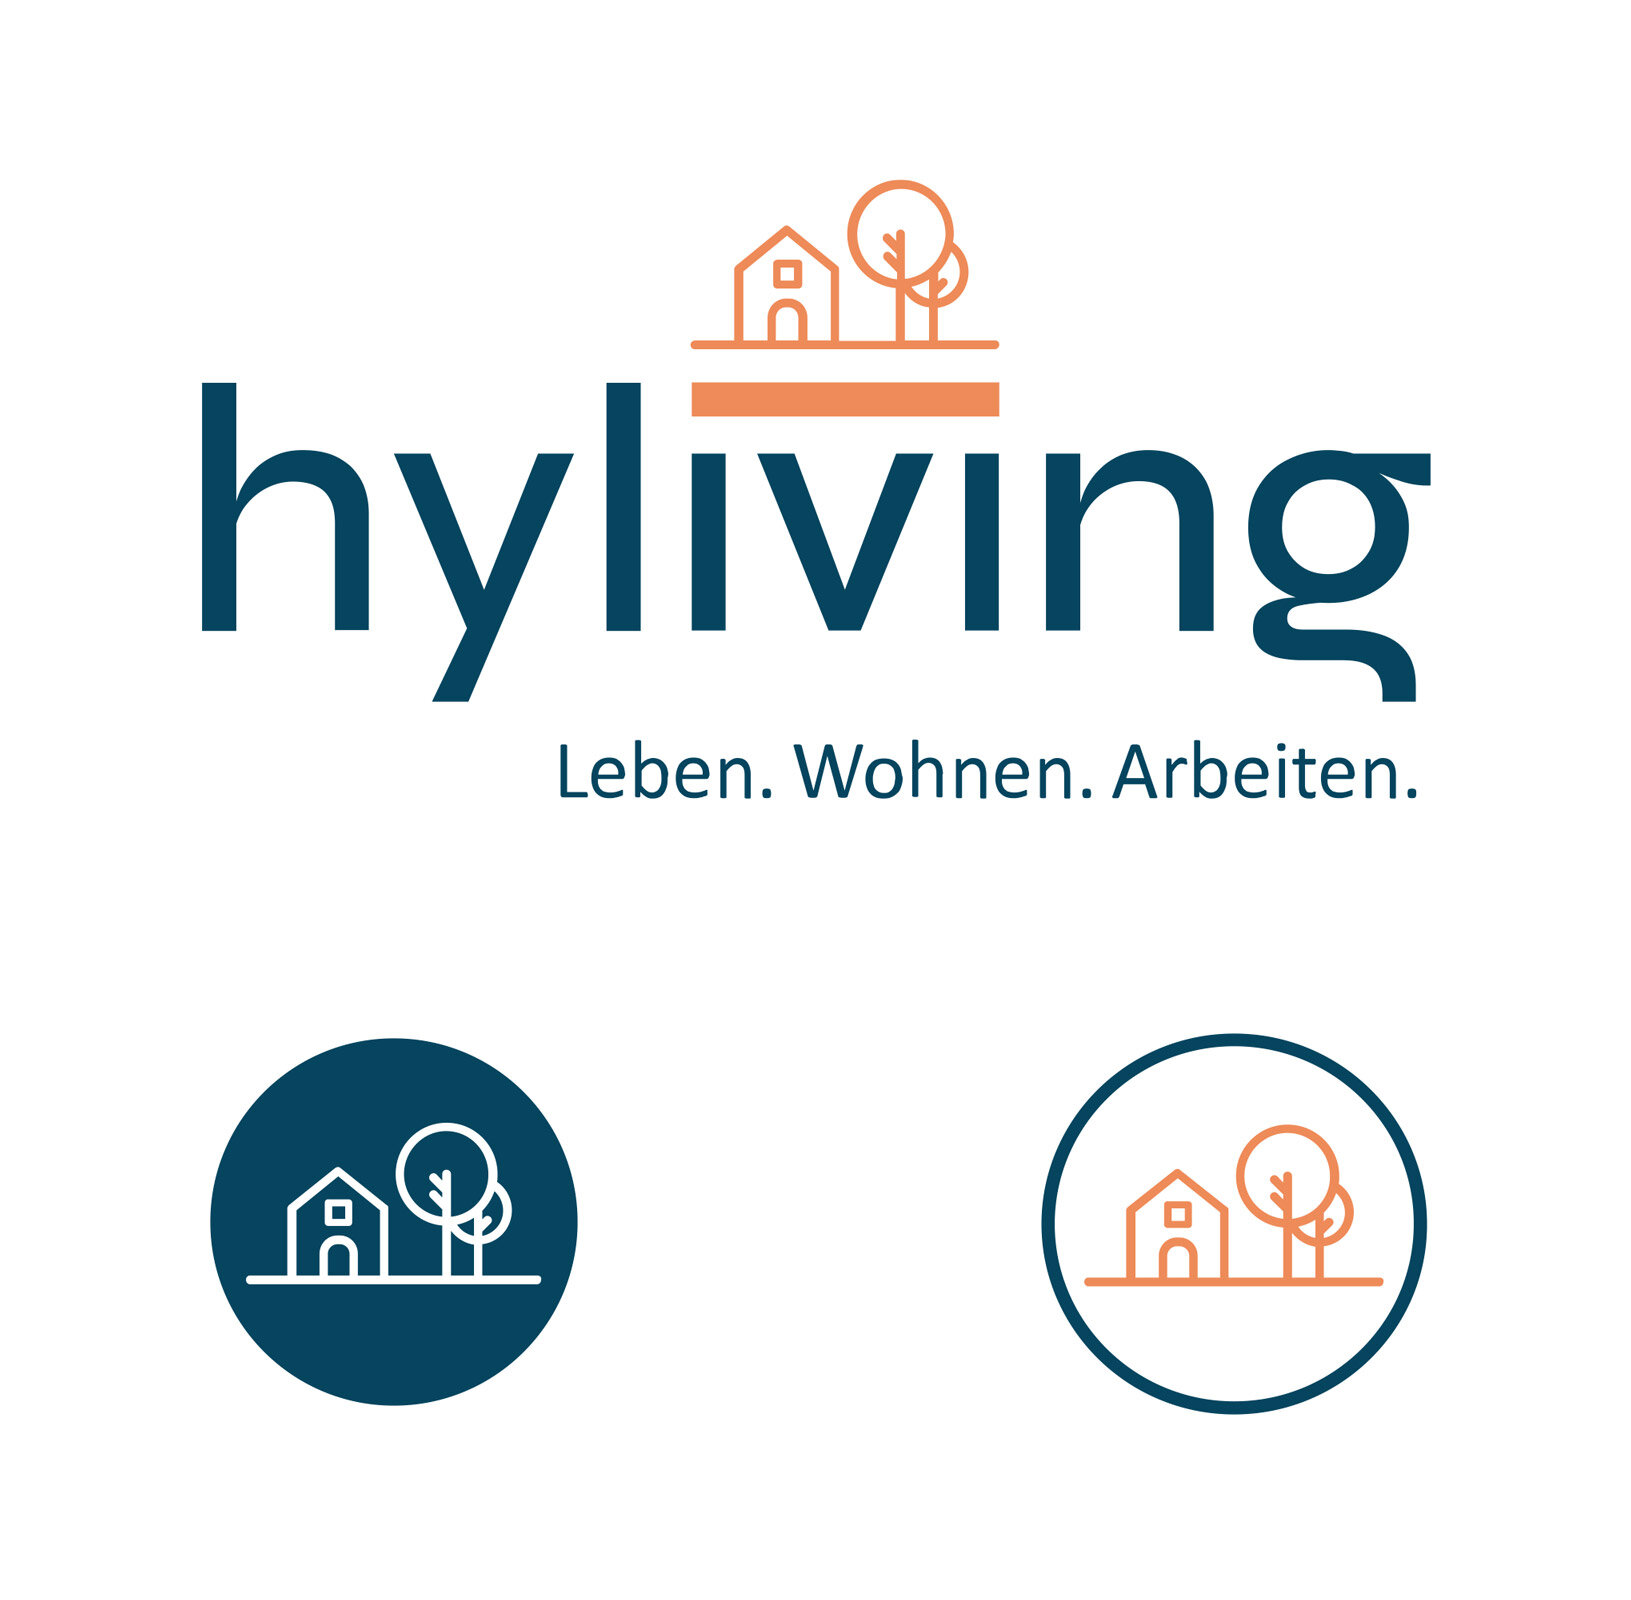 hyliving_logo1.jpg